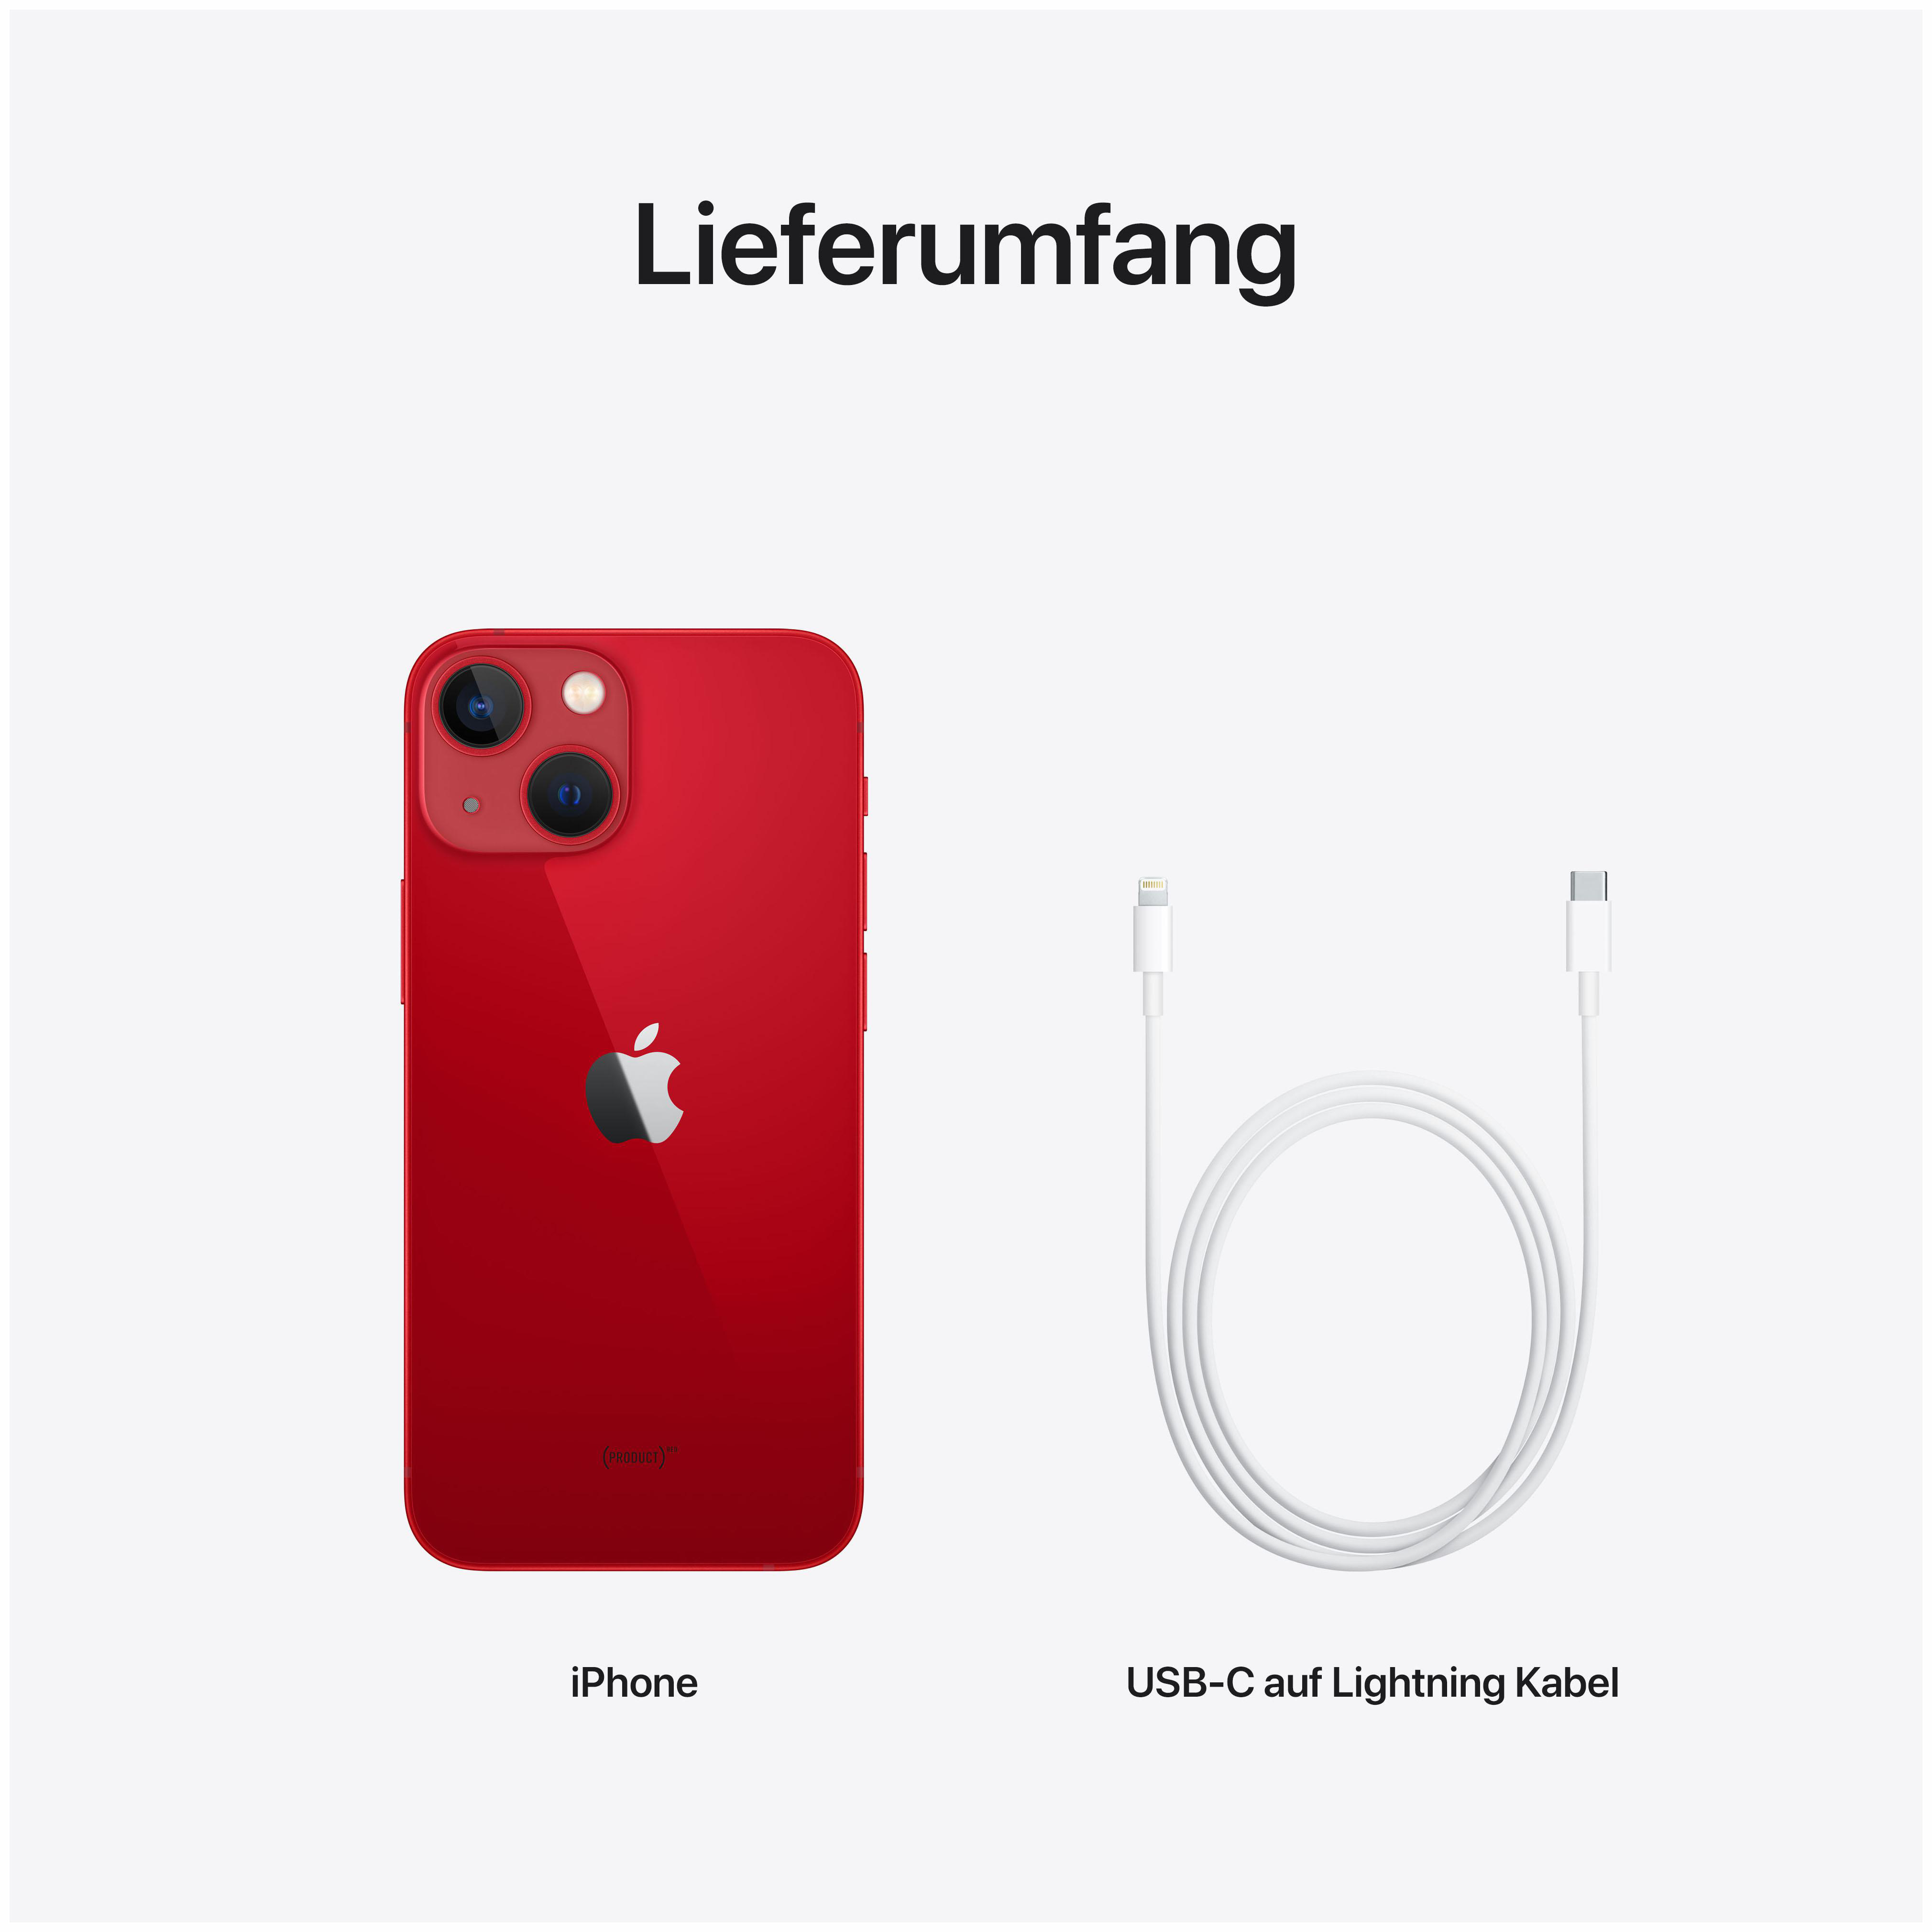 Dual 13 mini 256 GB APPLE SIM (Product) Red iPhone